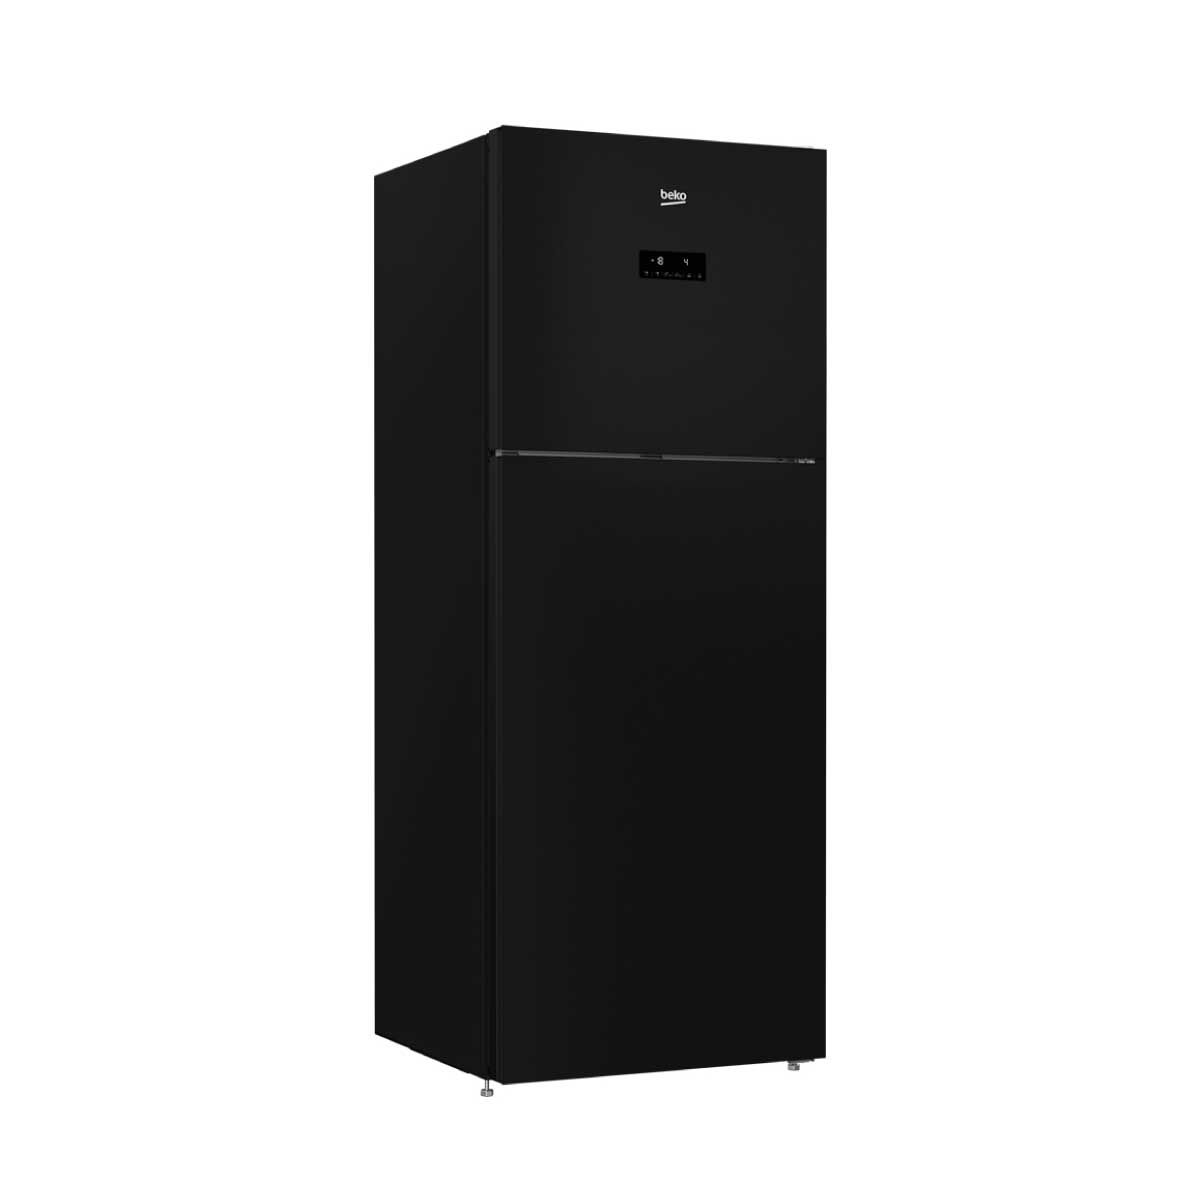 BEKO ตู้เย็น 2 ประตู Inverter  14.9 คิว สีดำ รุ่นRDNT470E50VZGB